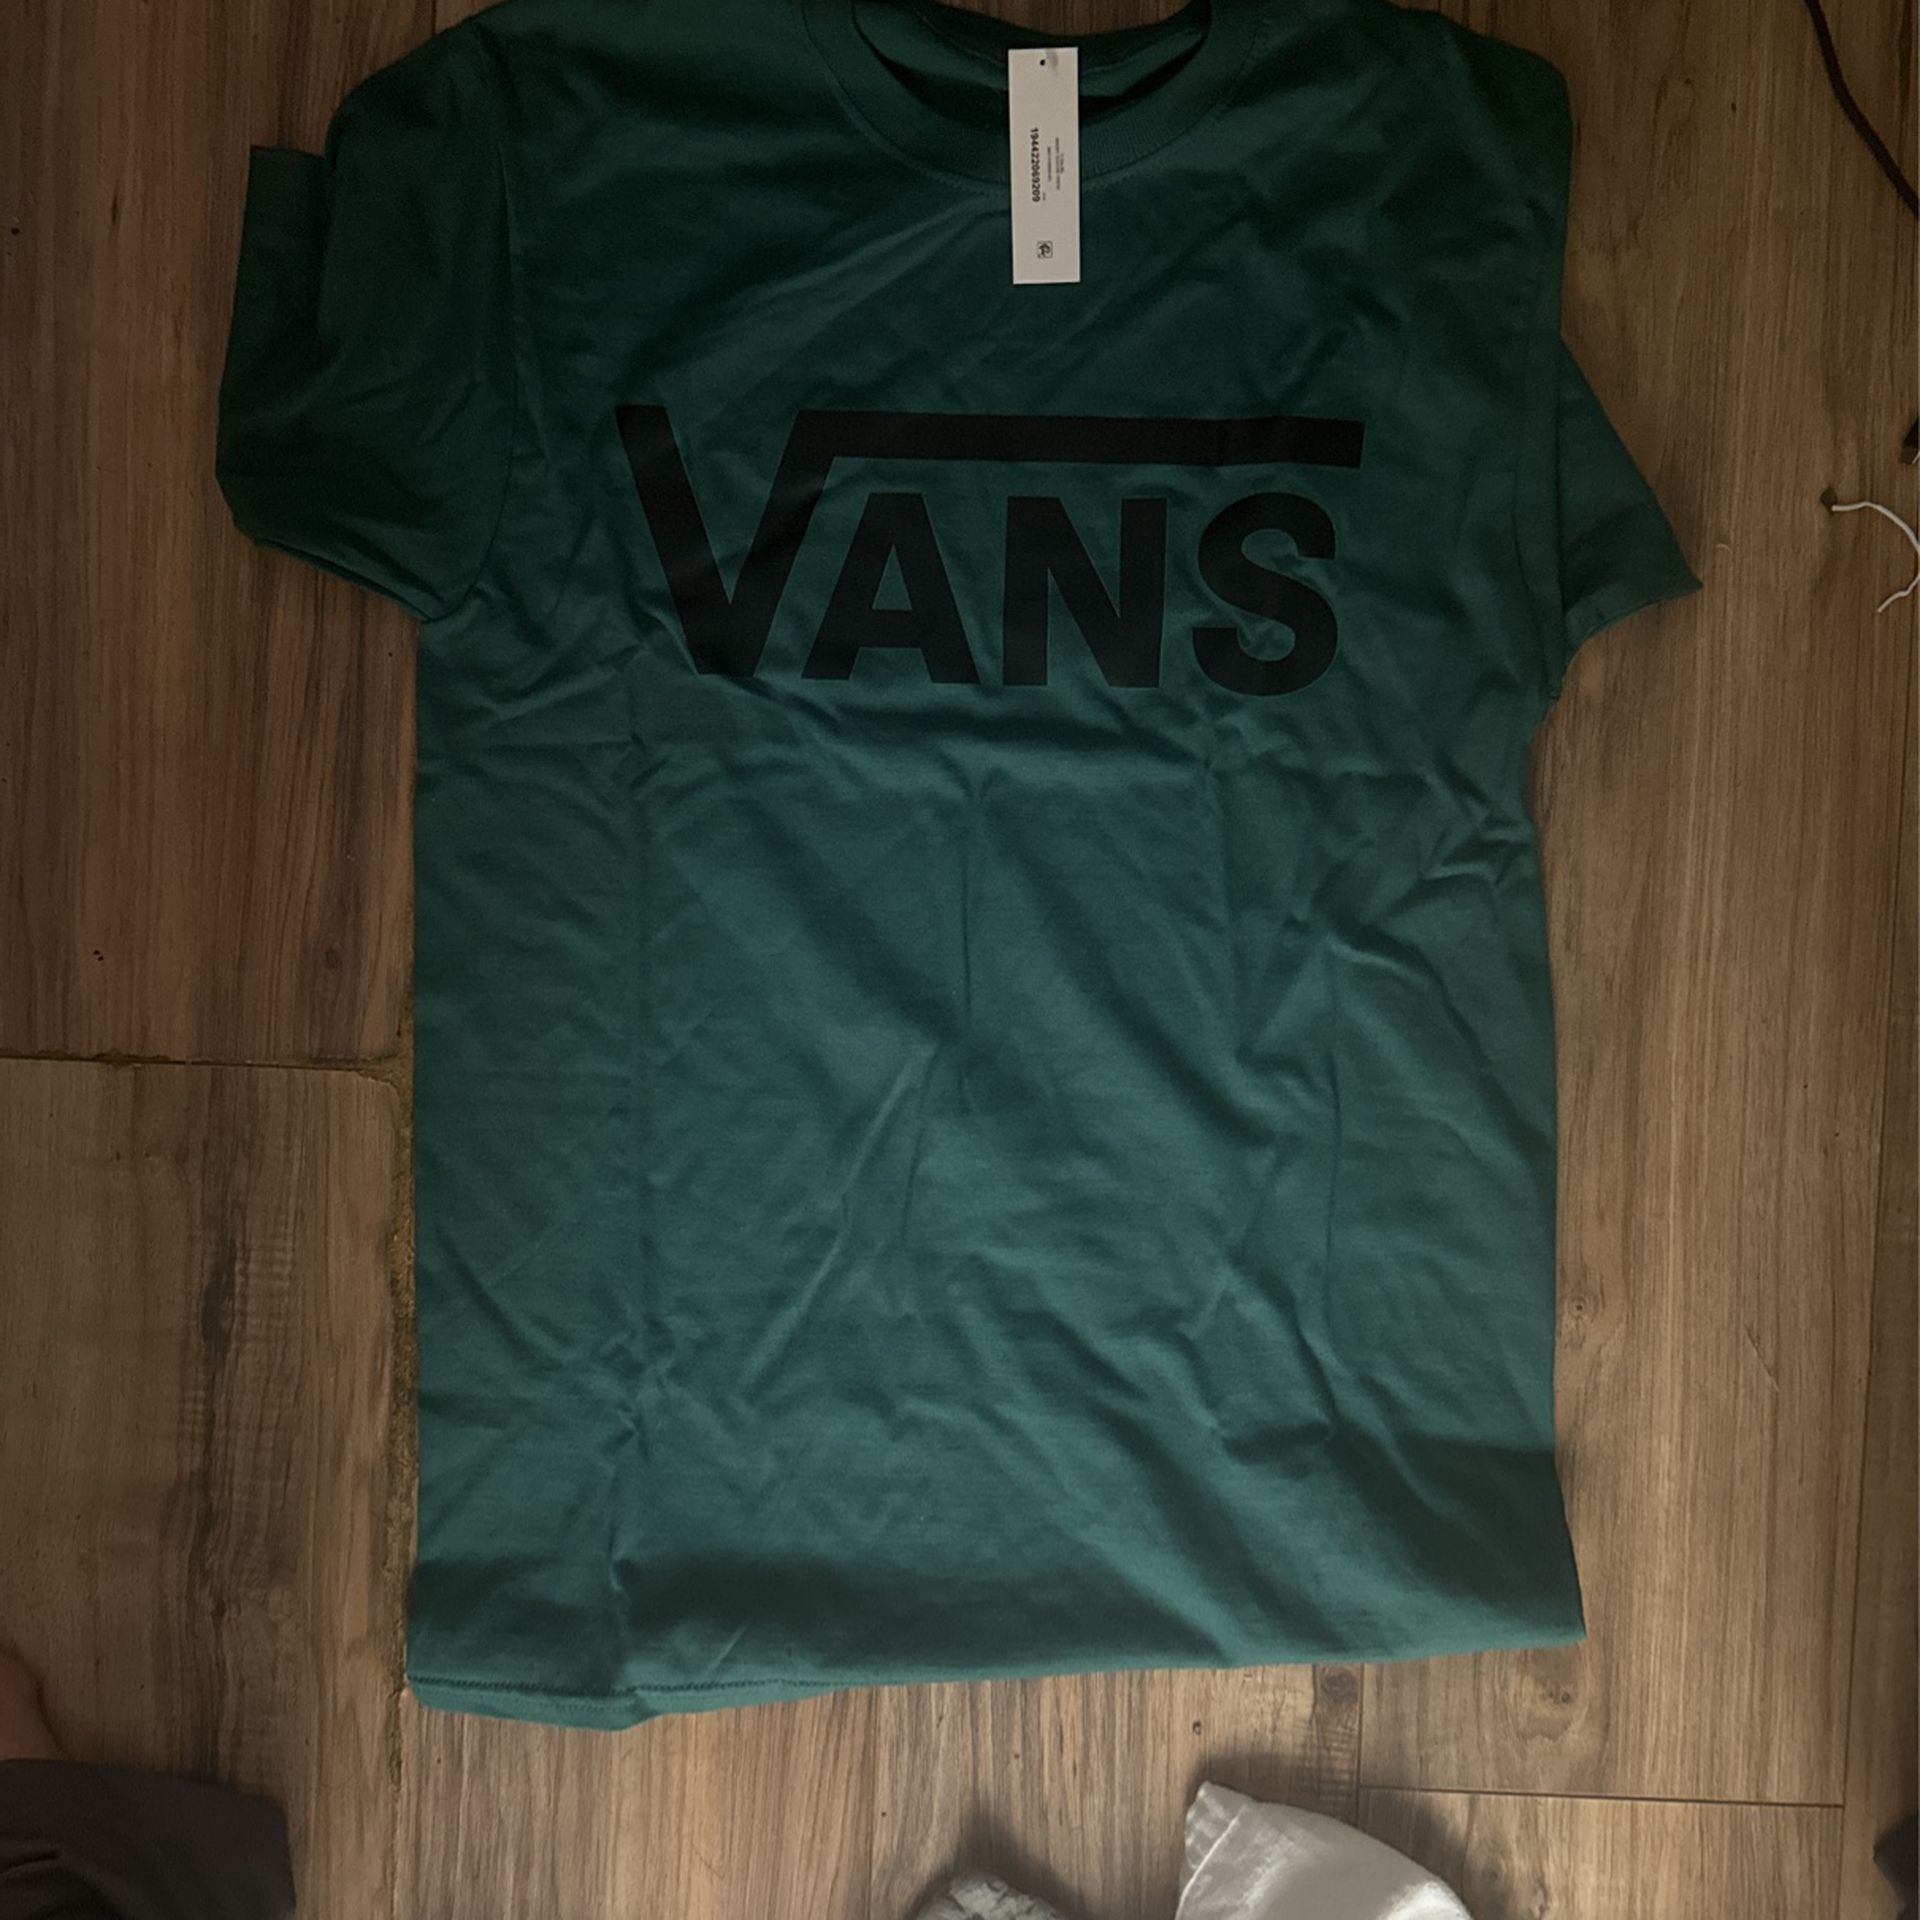 Vans T-shirt Size Small